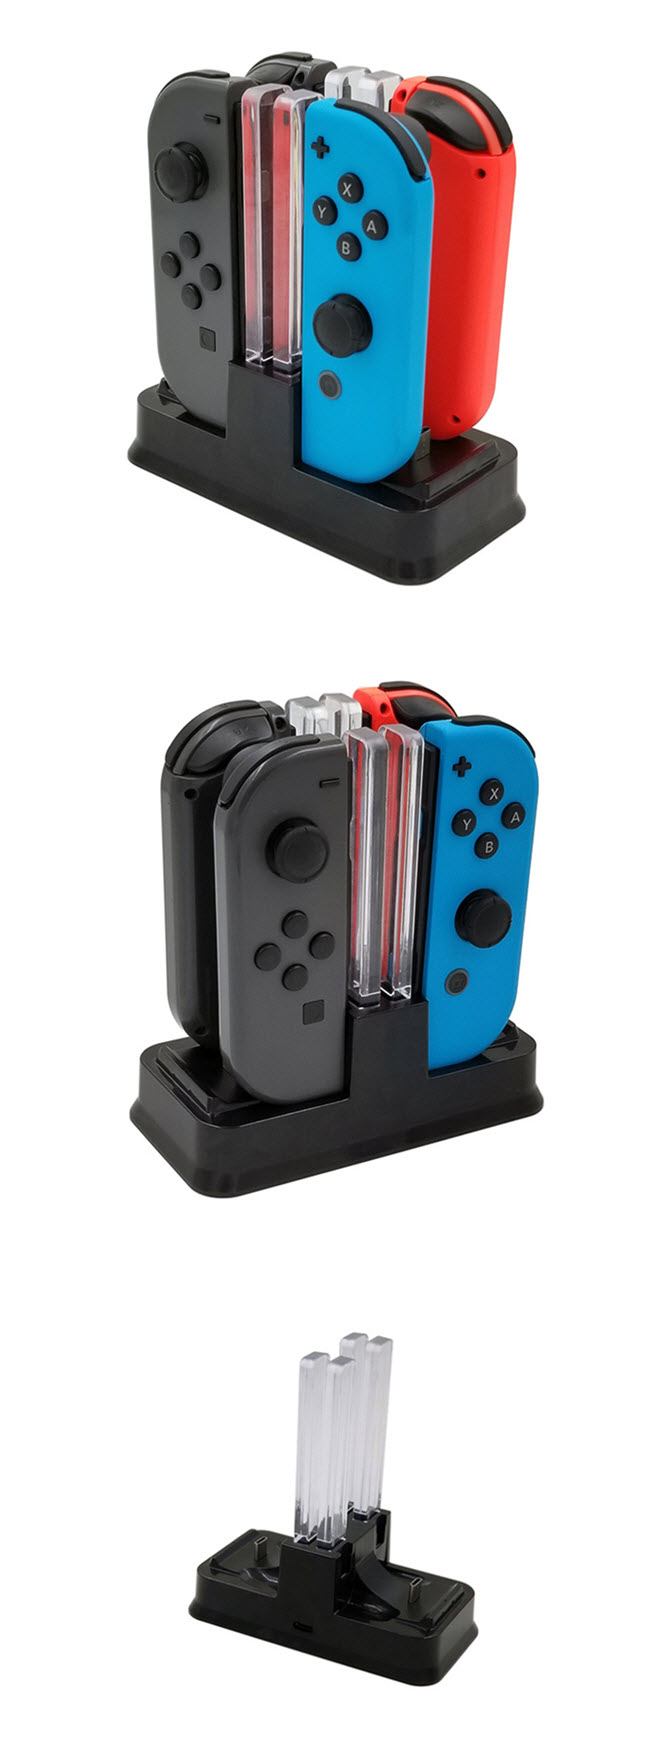 Nintendo任天堂Switch專用 Pro/Joy-Con手把充電座 (副廠)